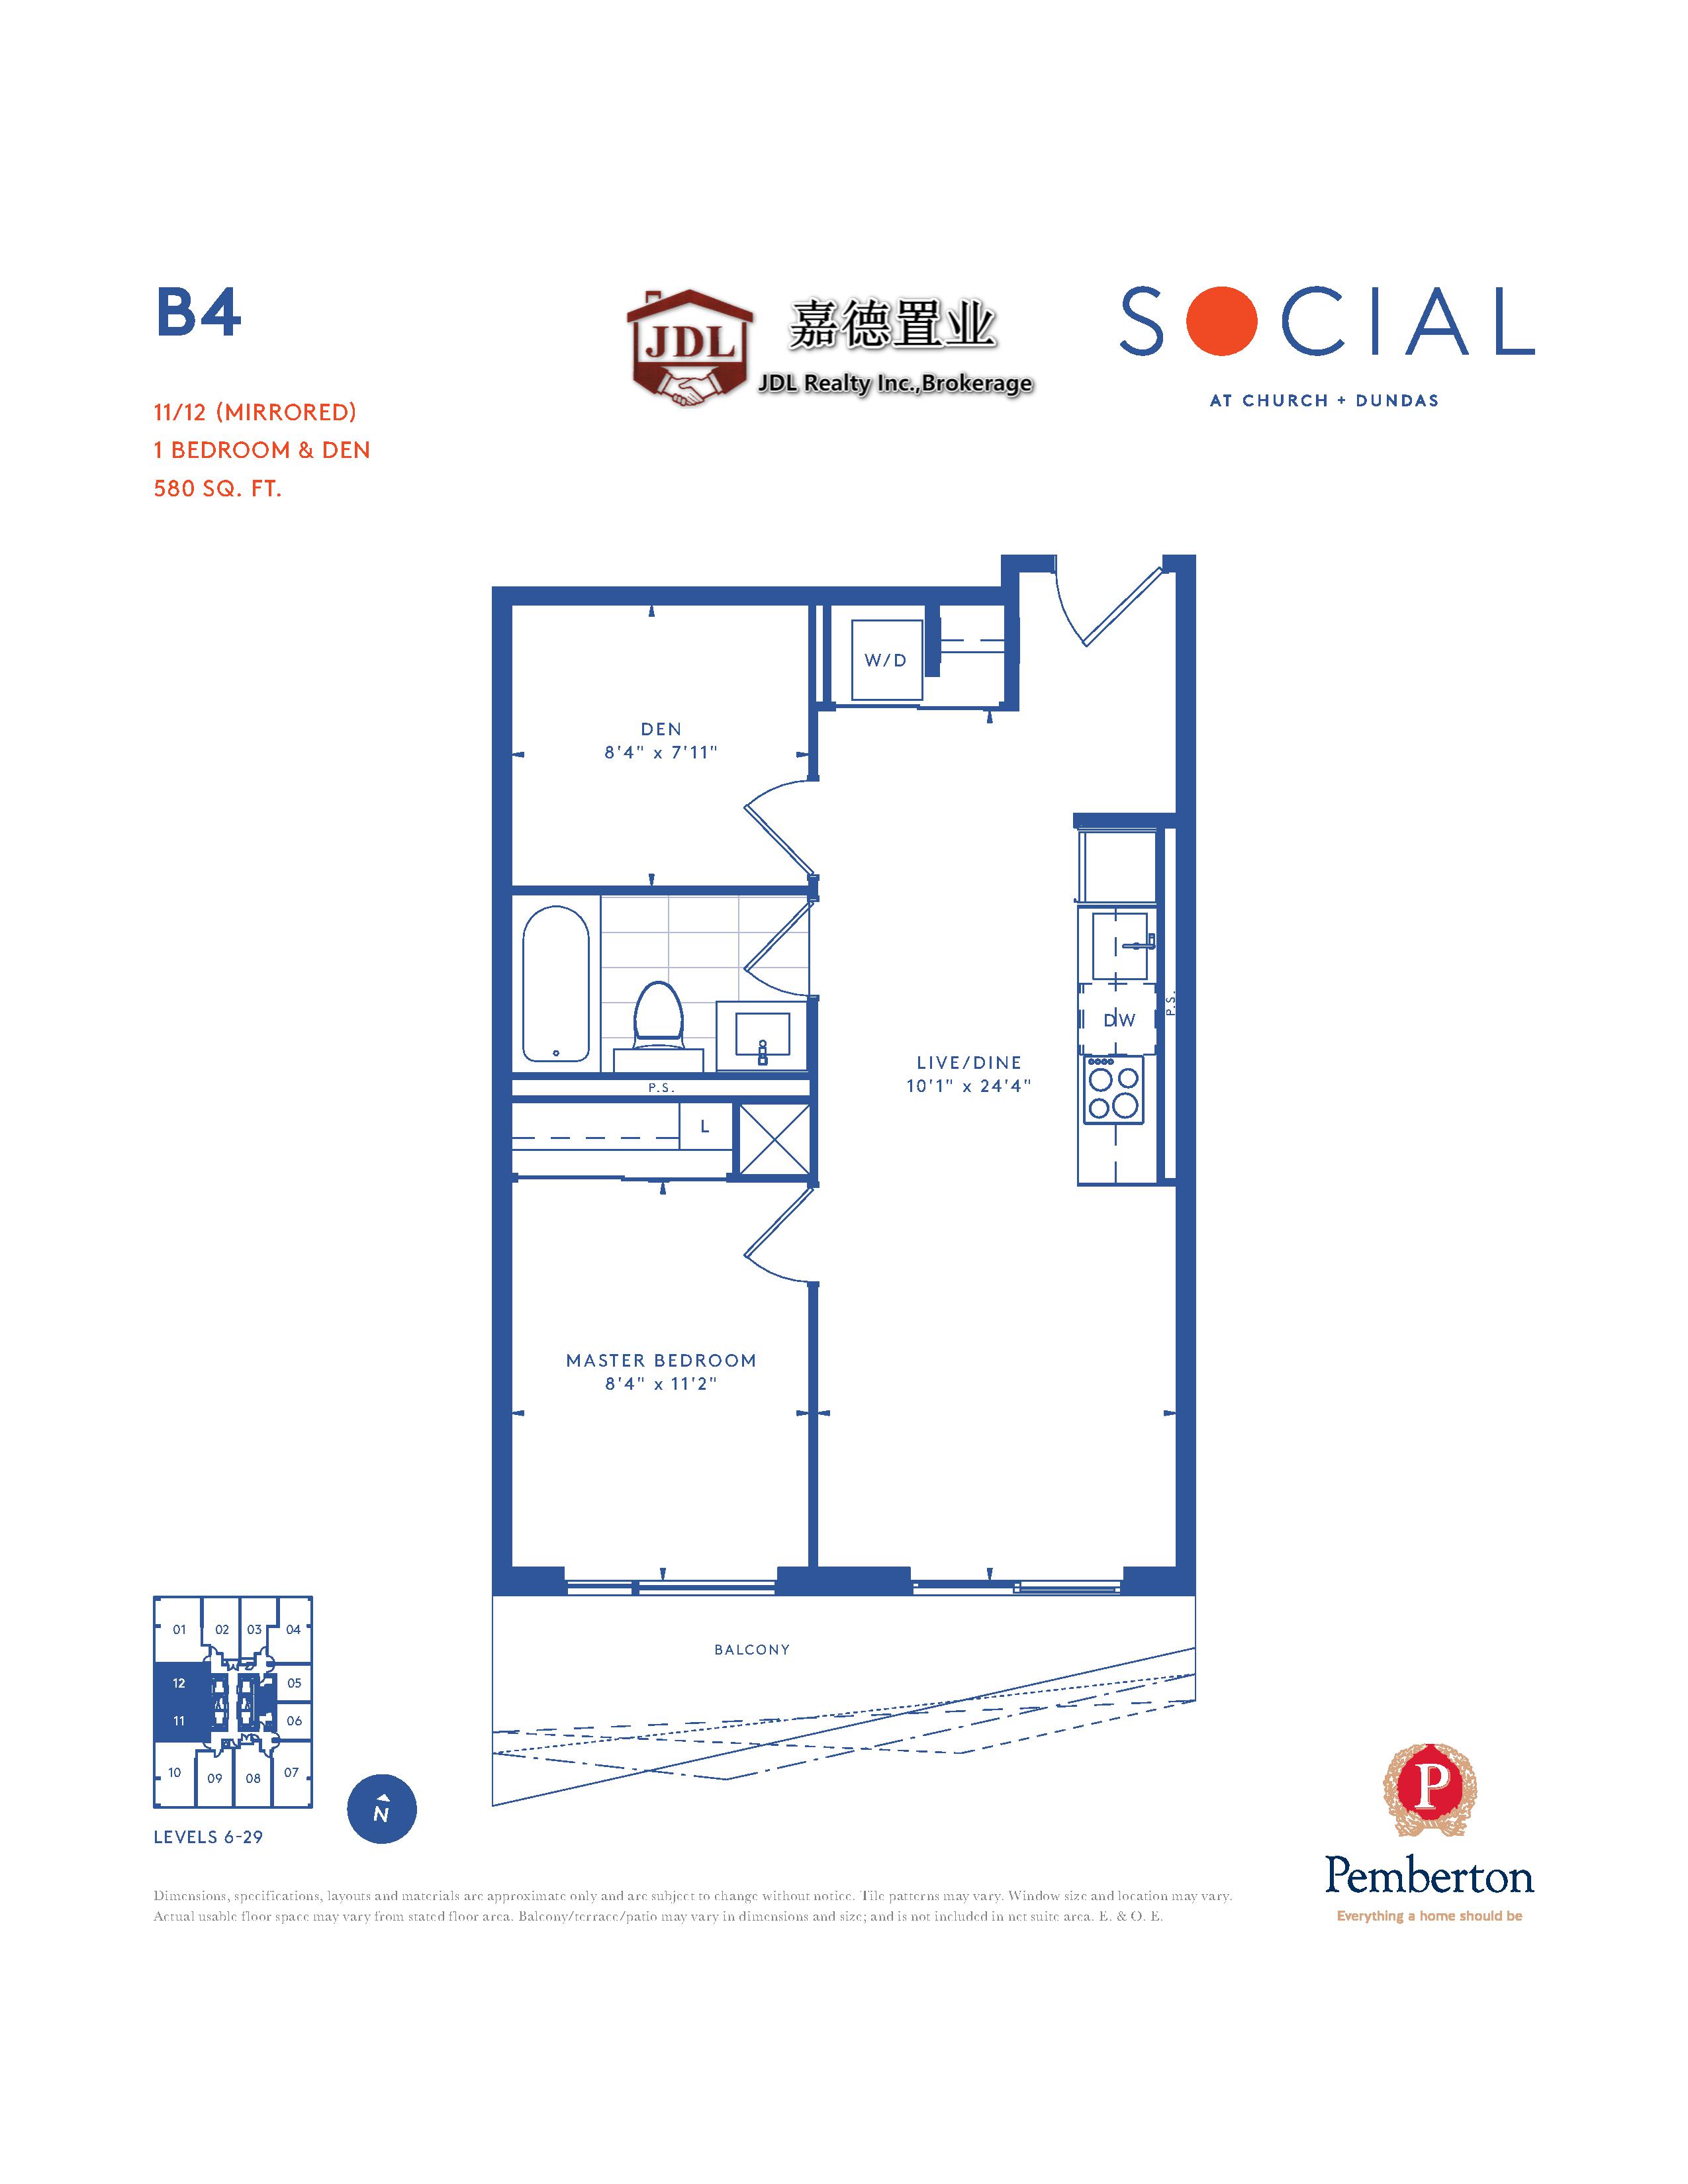 Social Tower floor plan 1 13